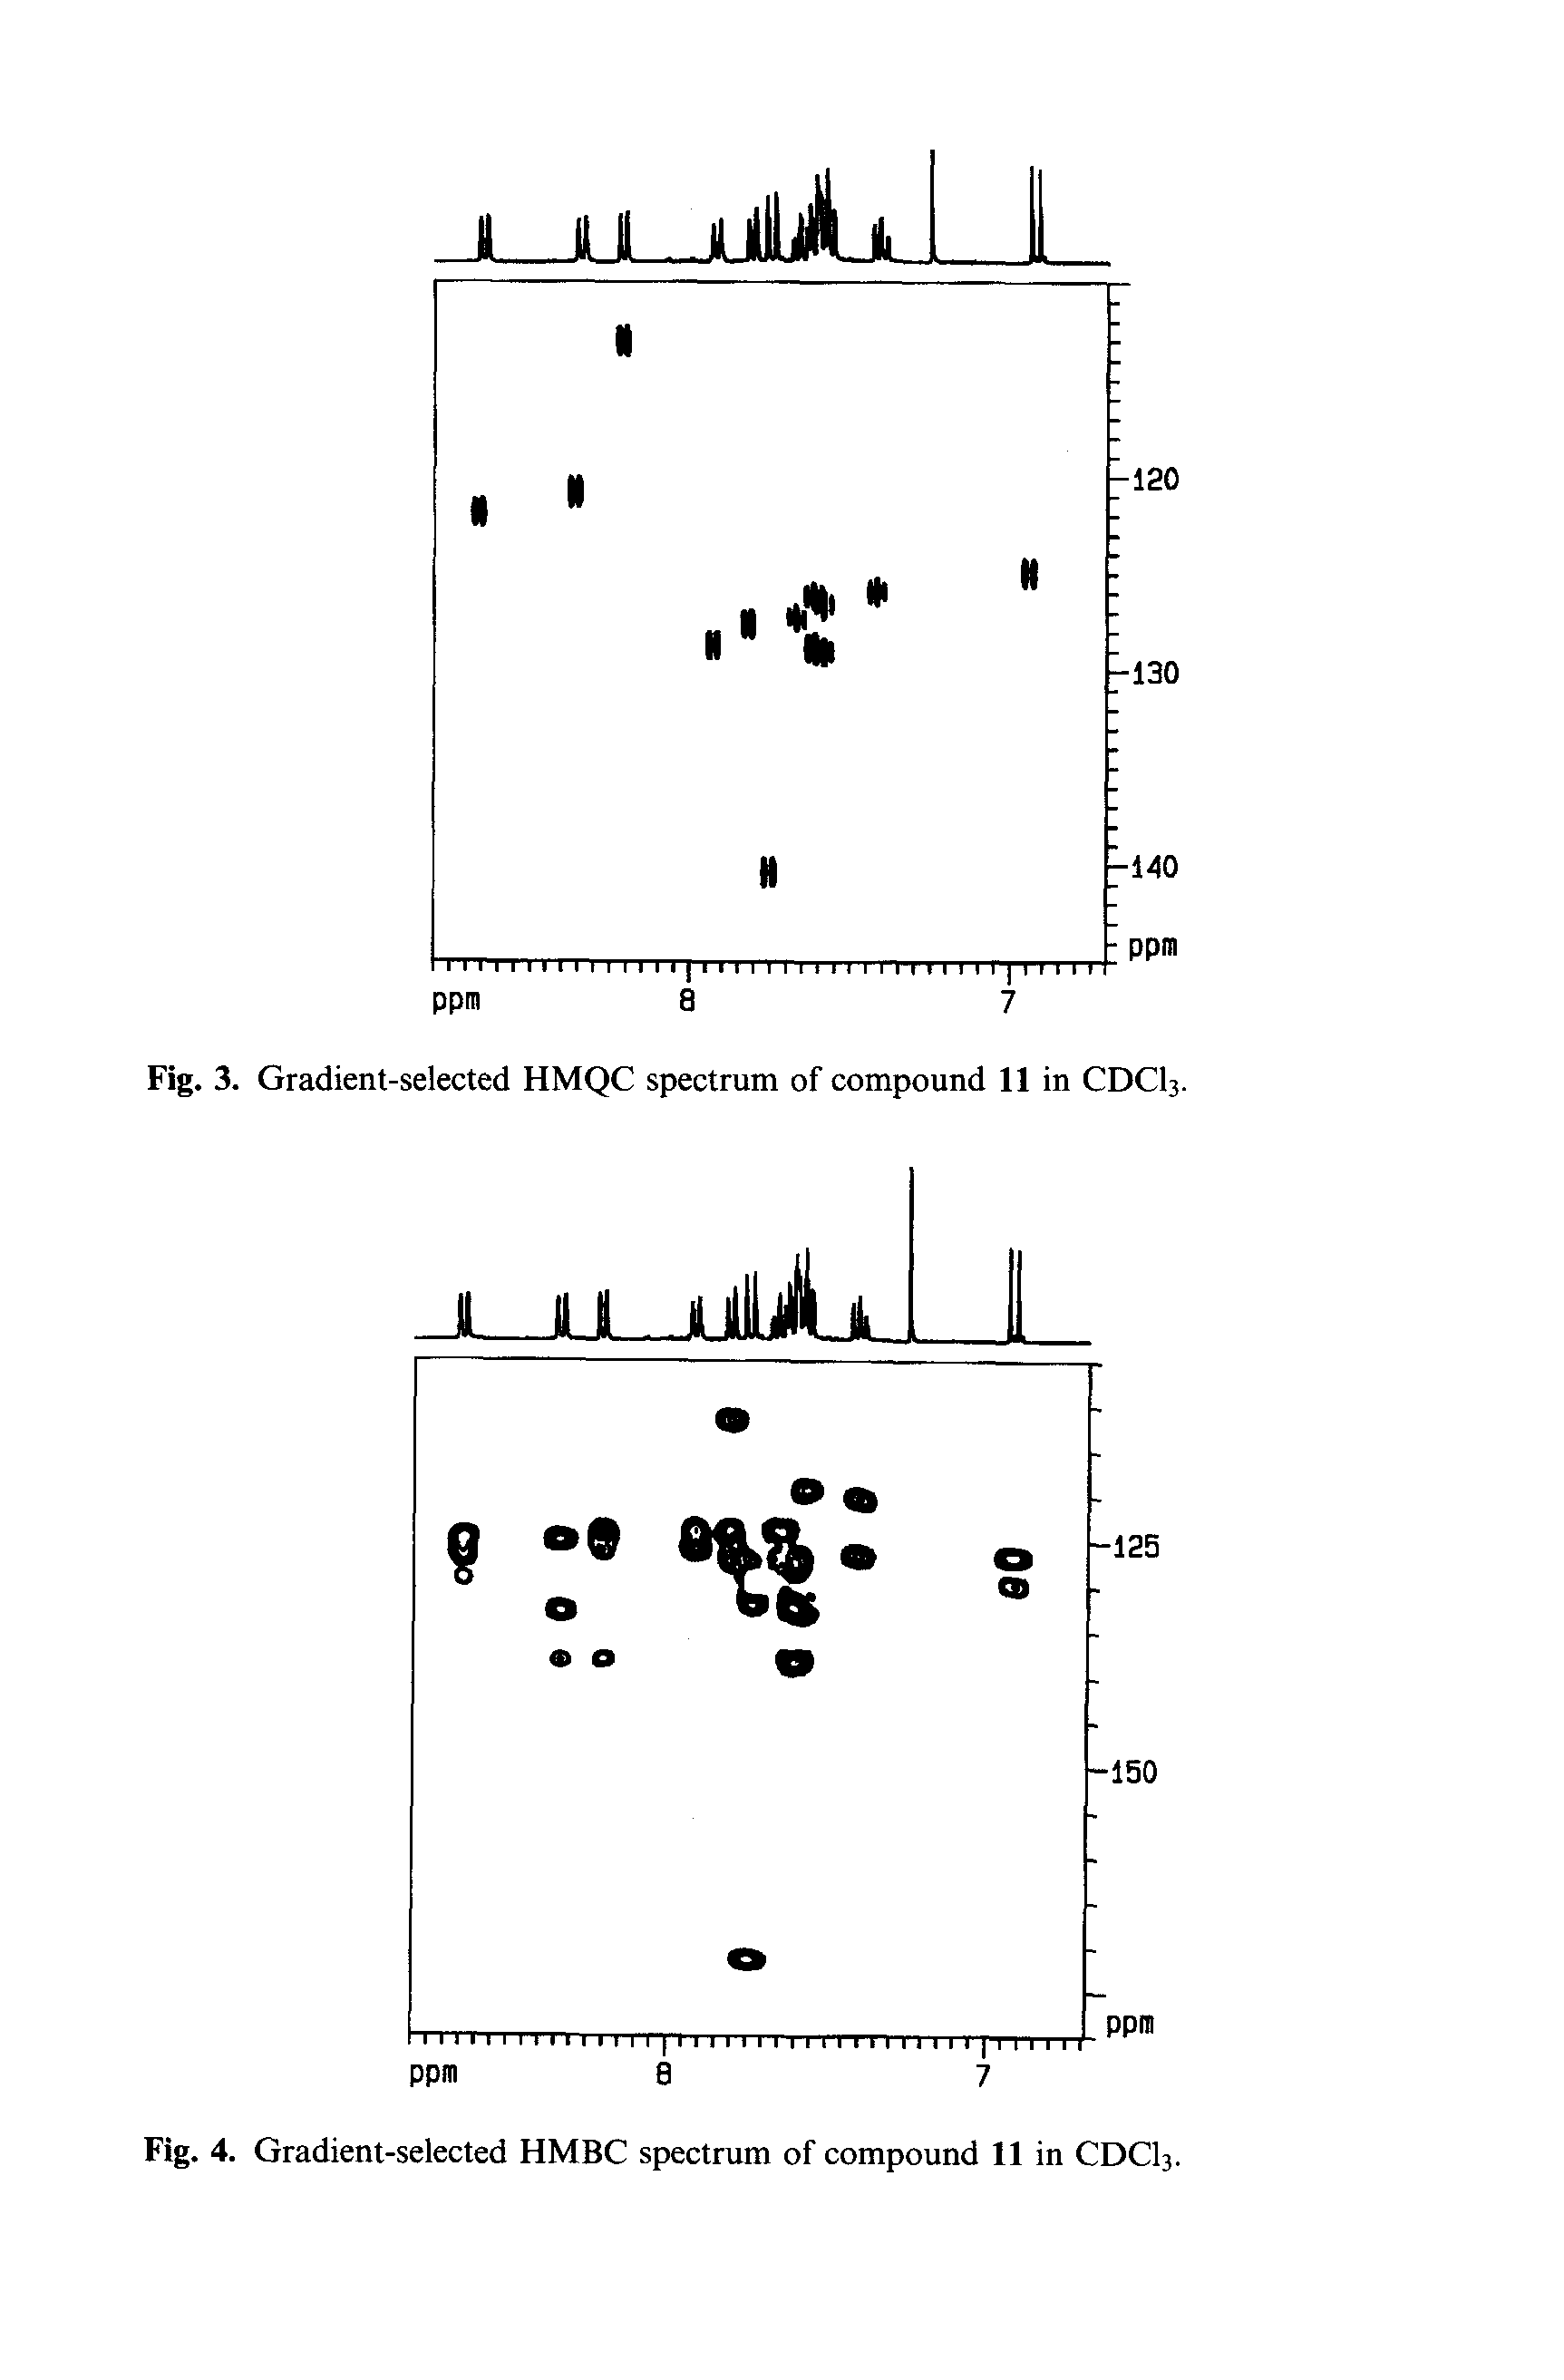 Fig. 4. Gradient-selected HMBC spectrum of compound 11 in CDCI3.